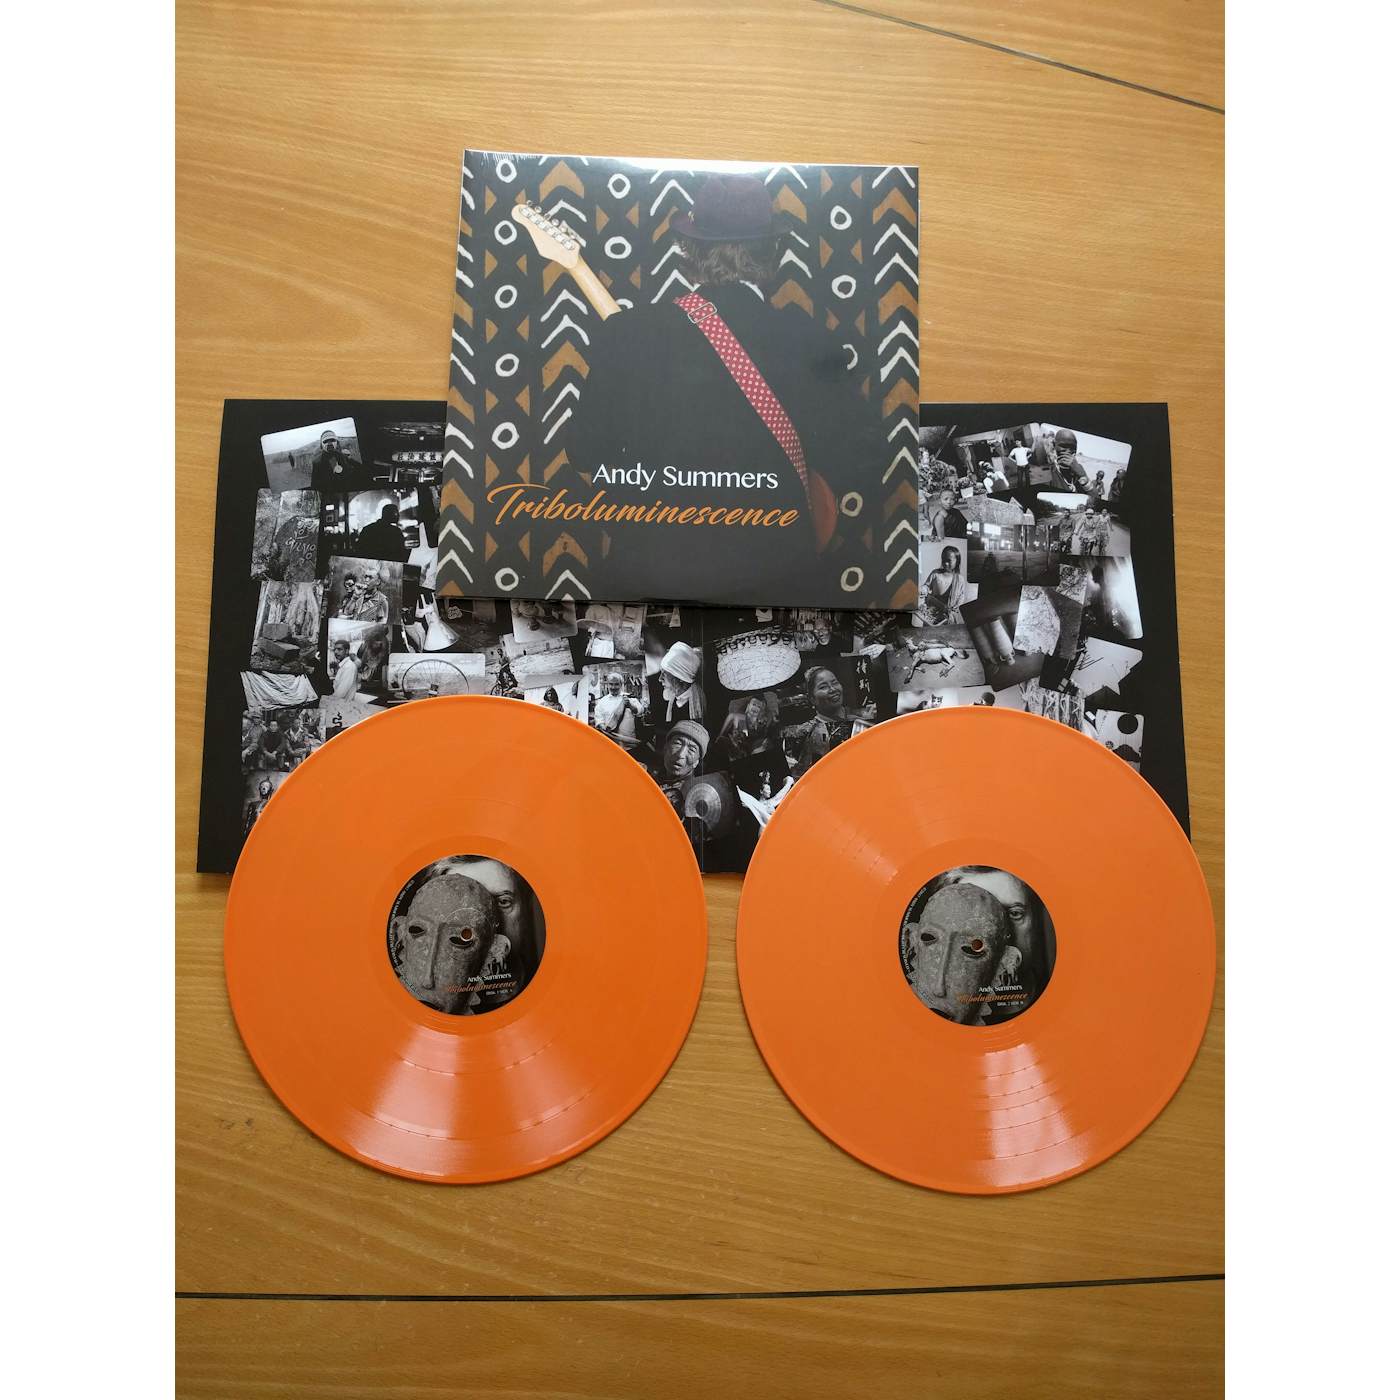 Andy Summers 'Triboluminescence' Vinyl Record